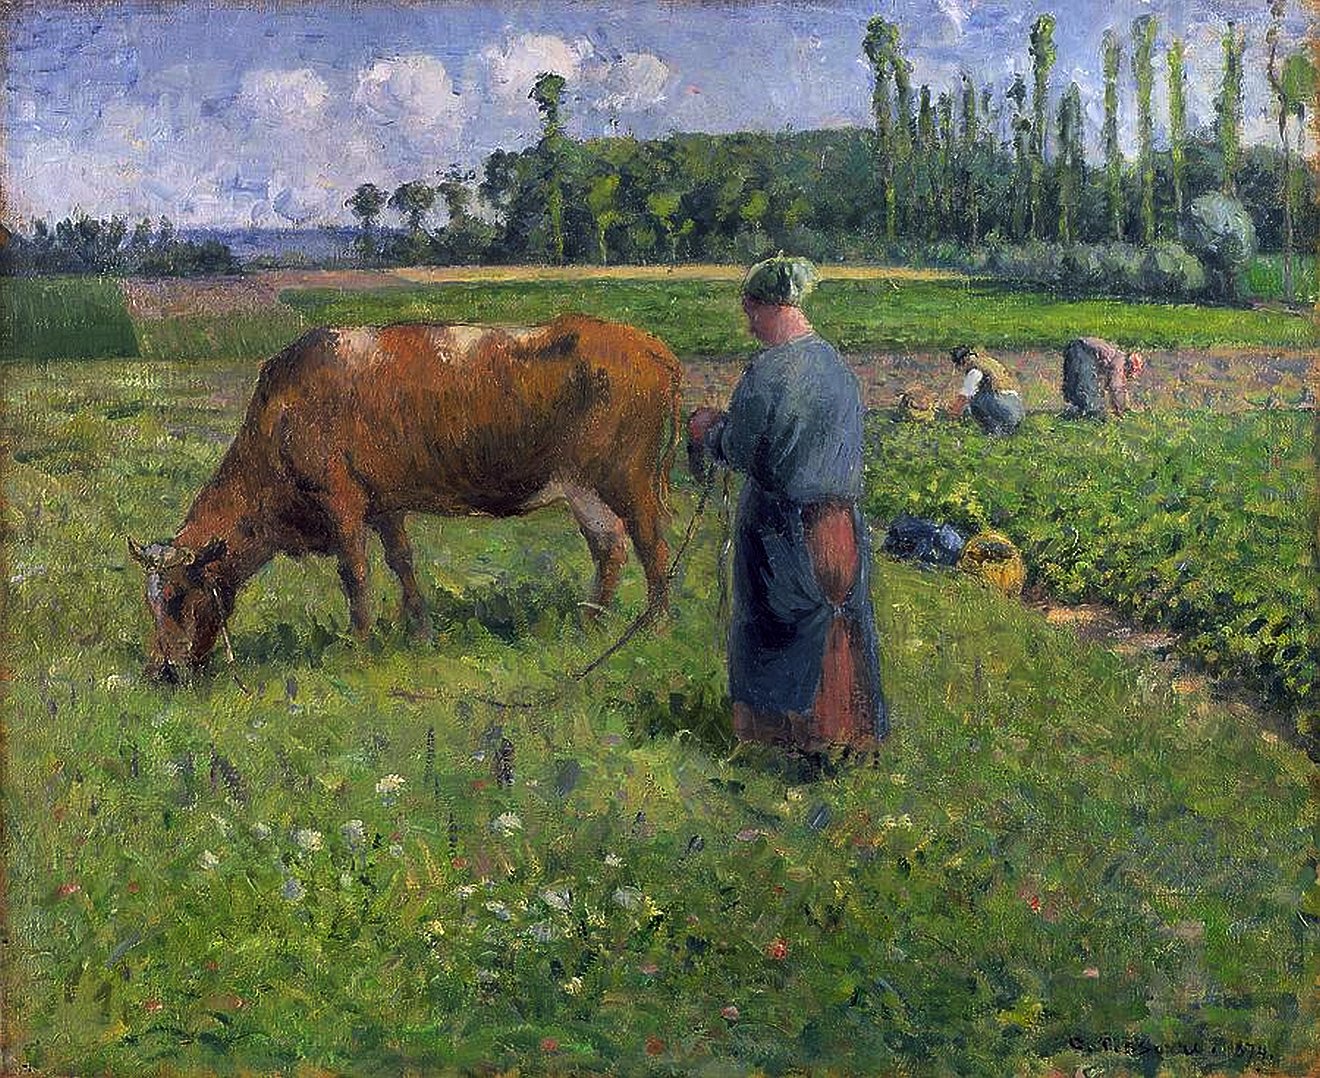 Camille+Pissarro-1830-1903 (206).jpg